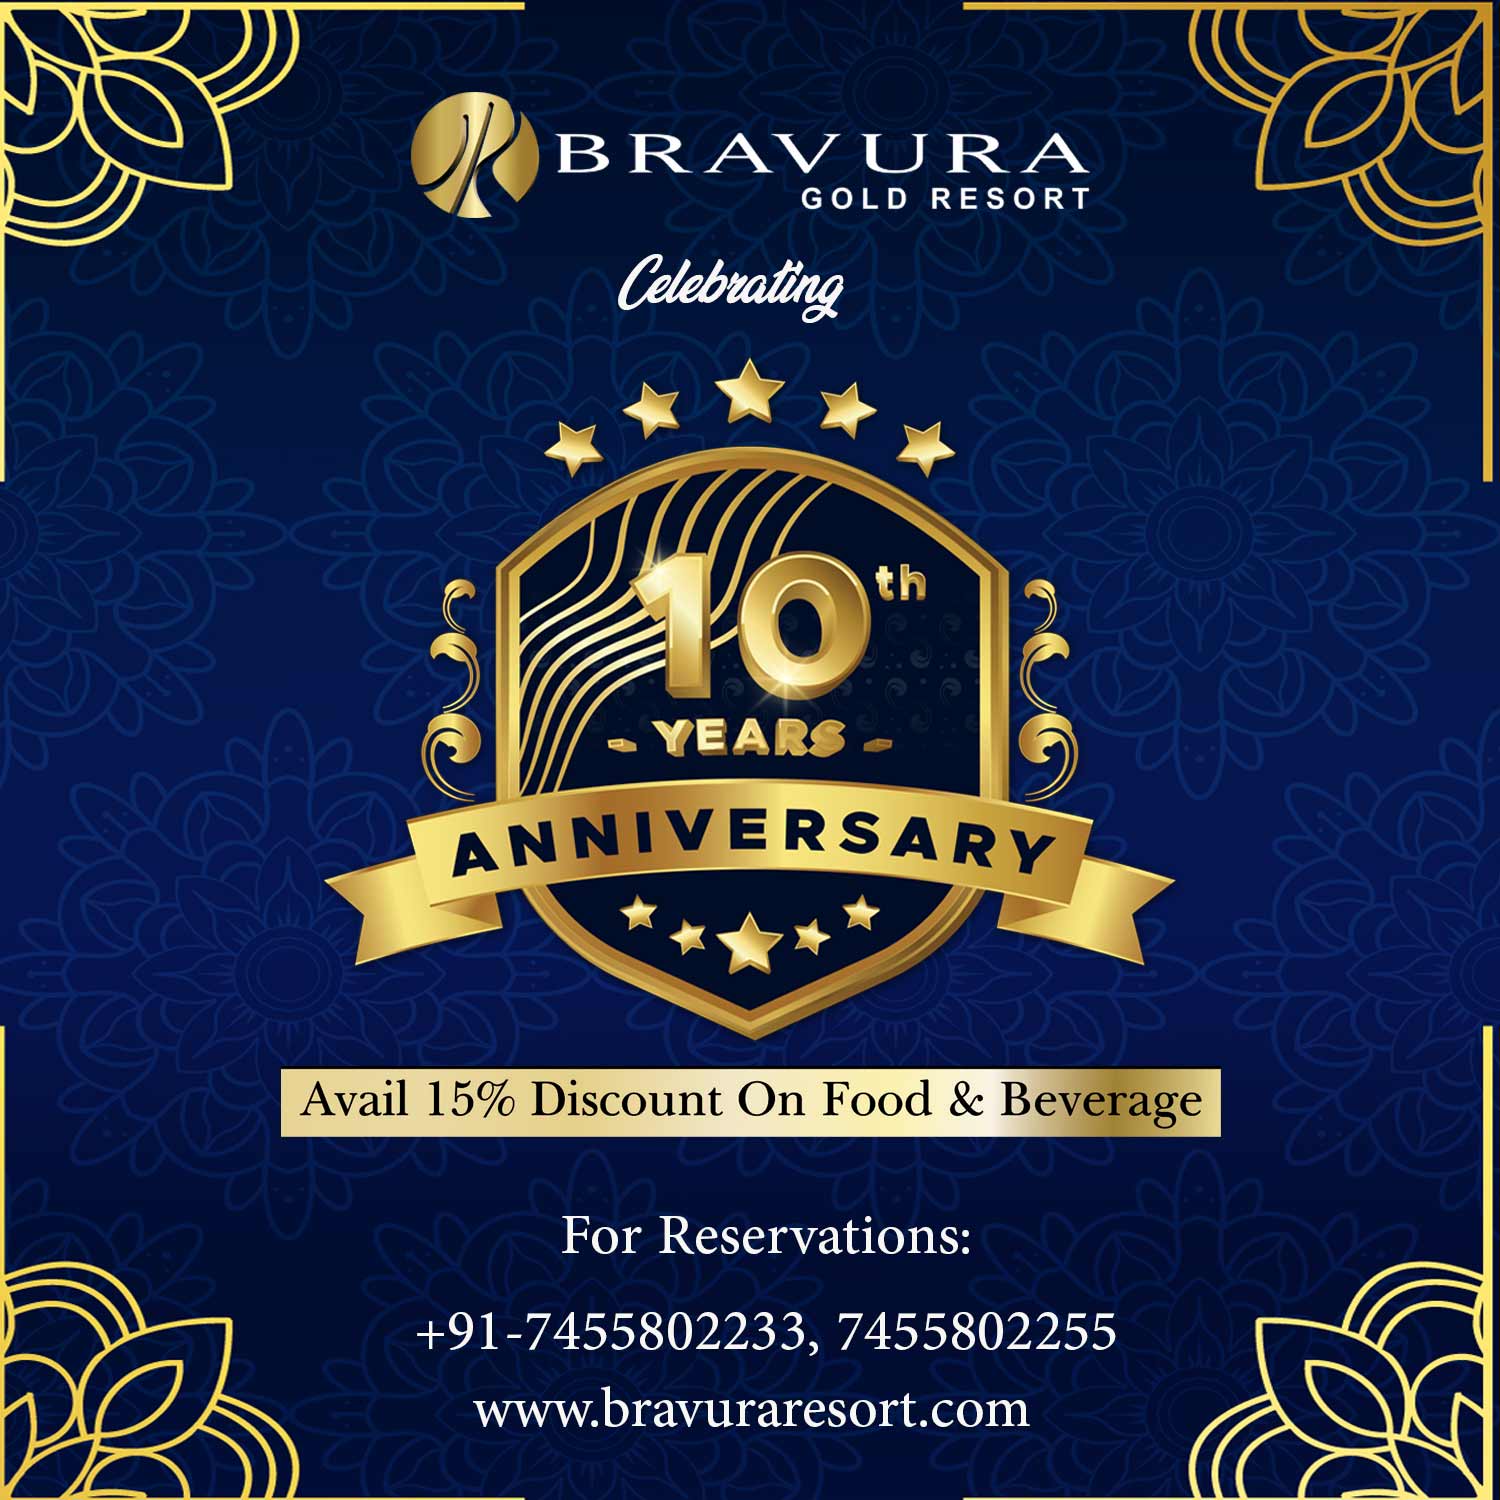 celebrating-10th-anniversary-of-bravura-gold-resort